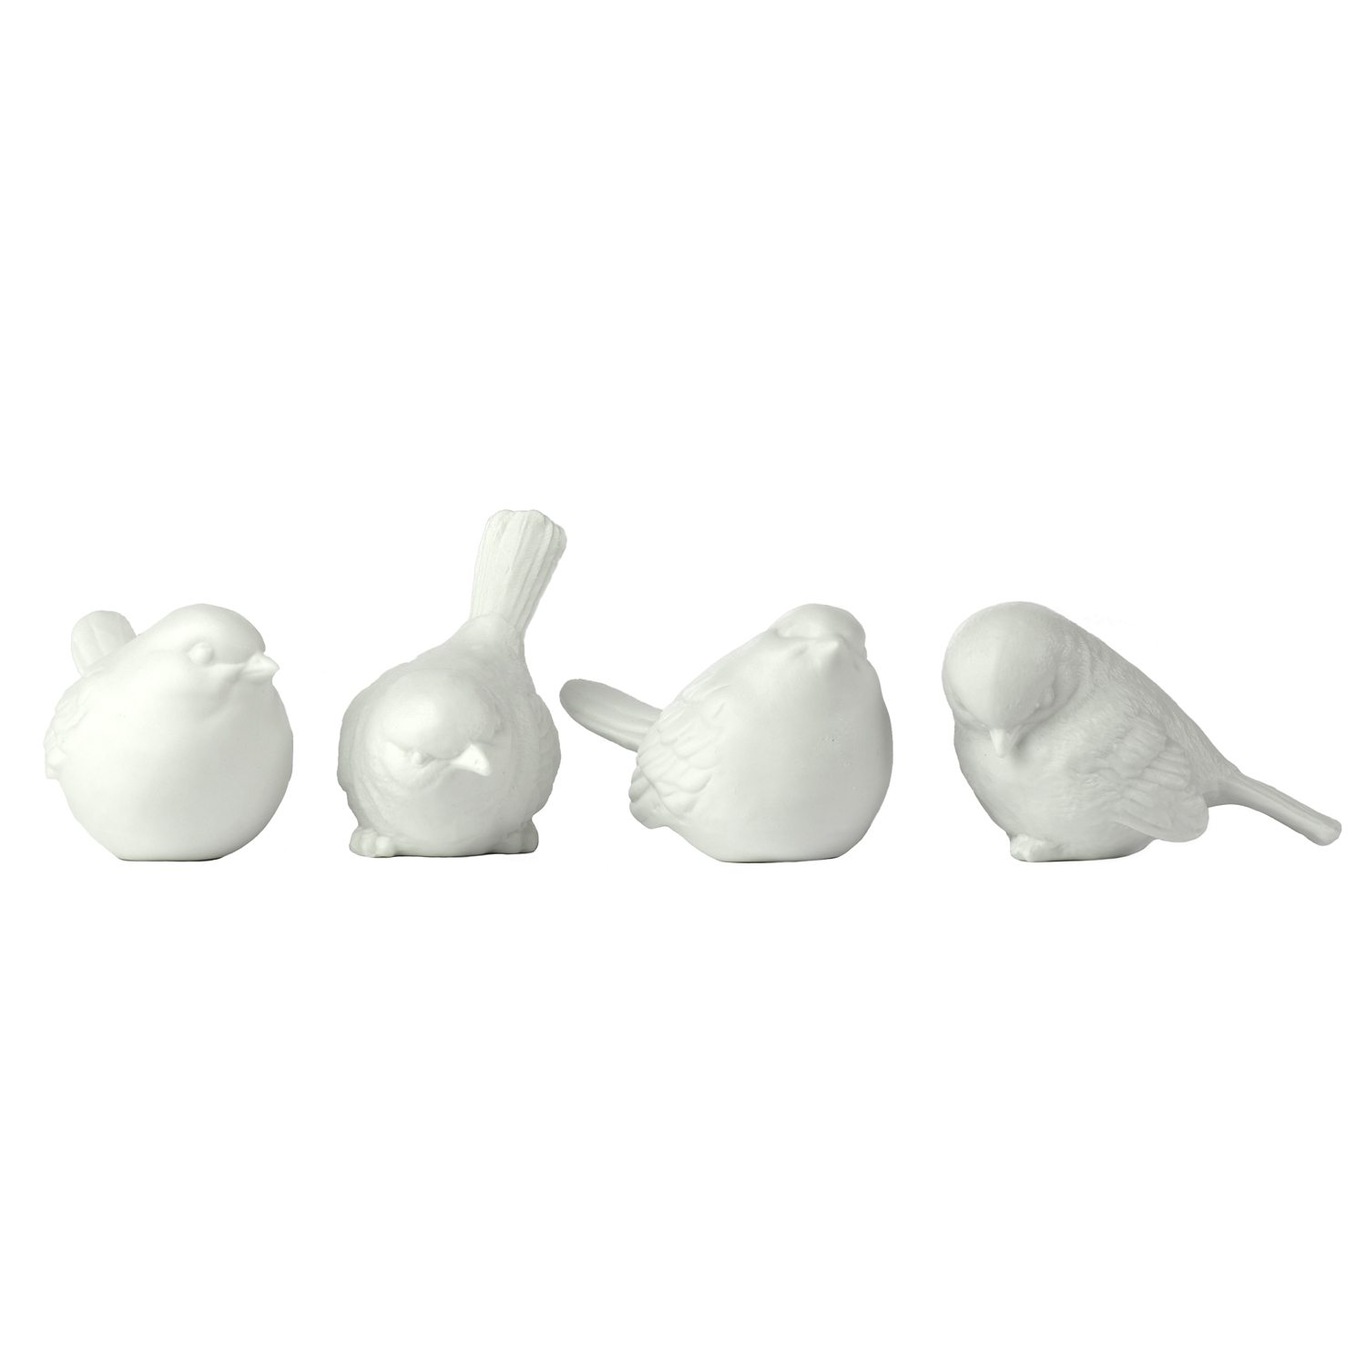 Sparrow Porcelain birds 4-Pack, white